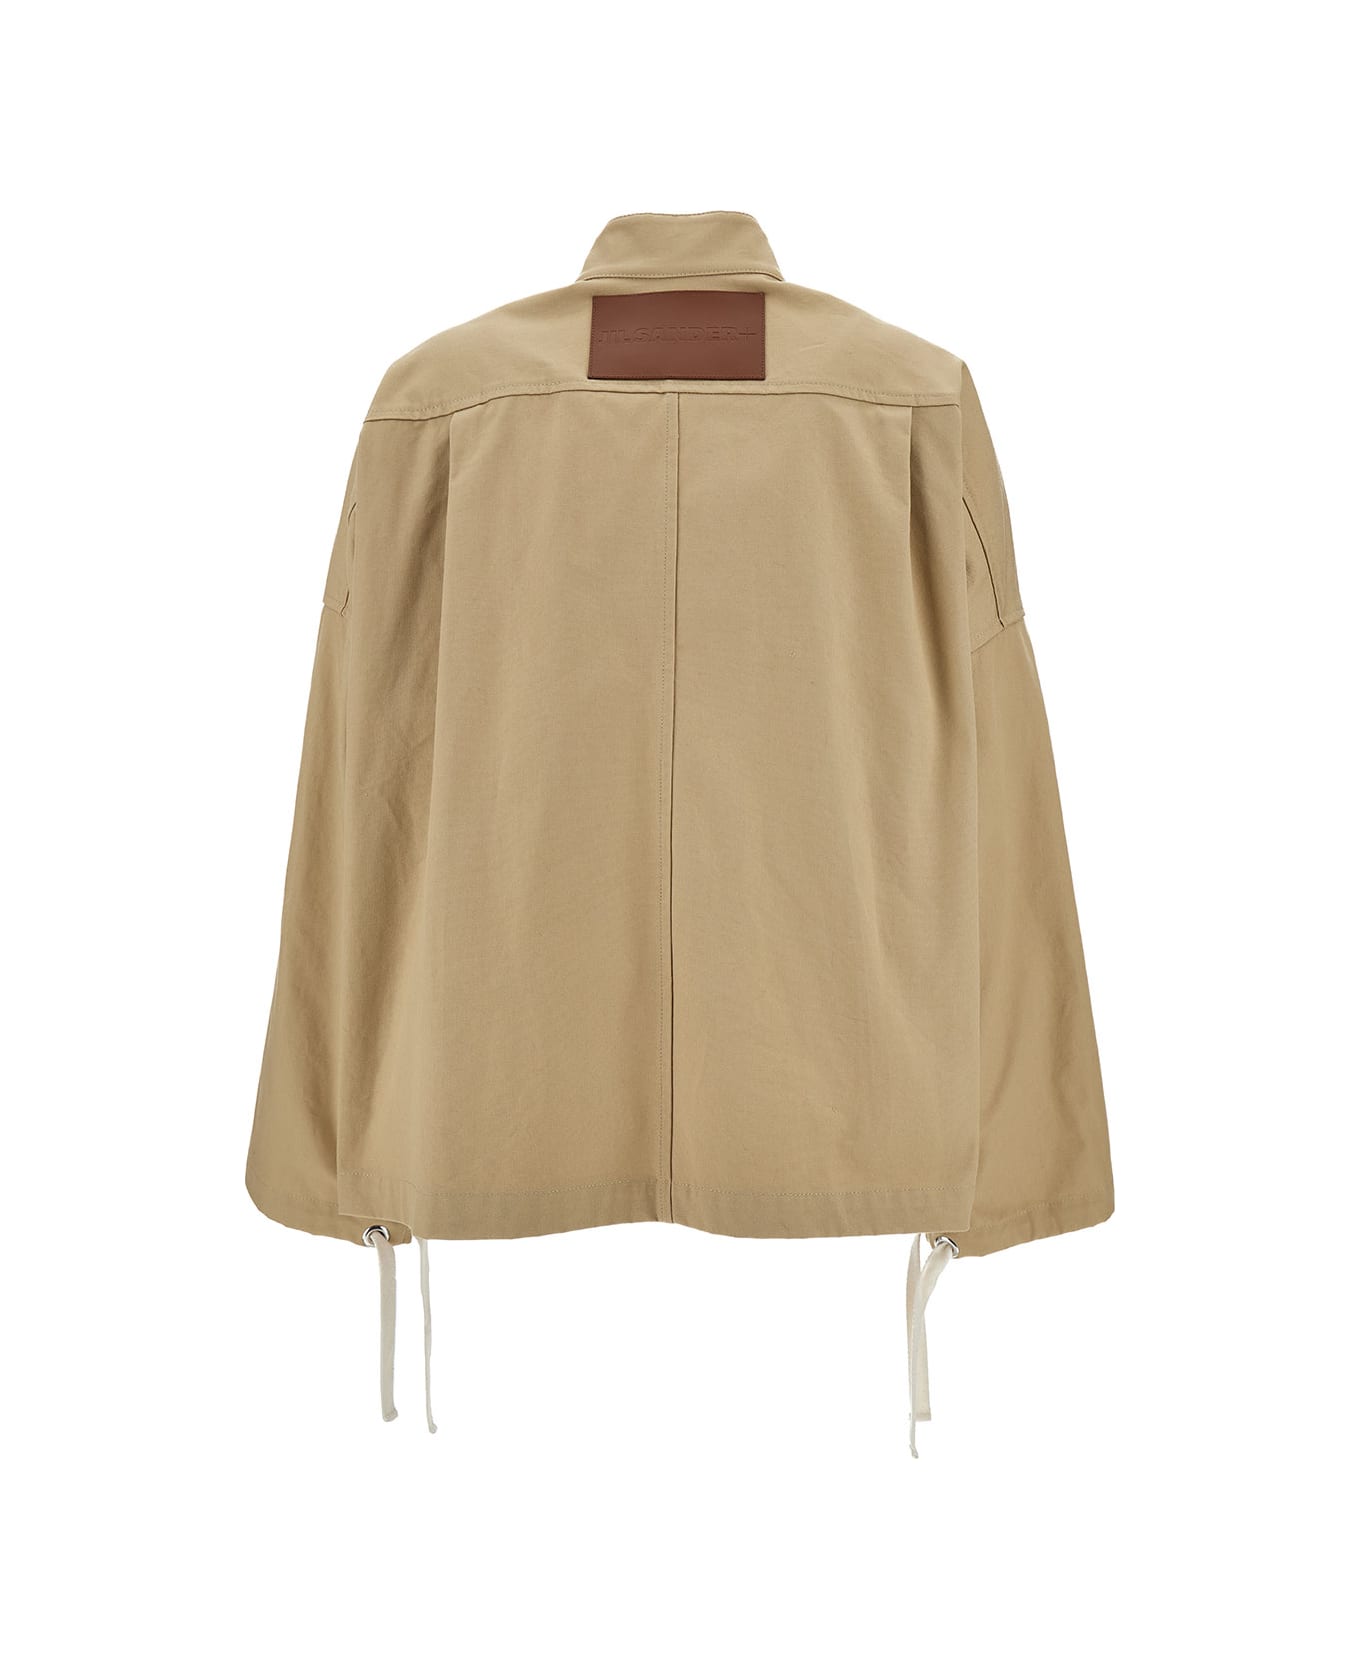 Jil Sander Beige Jacket With Leather Logo Patch In Cotton Canvas Woman - Beige